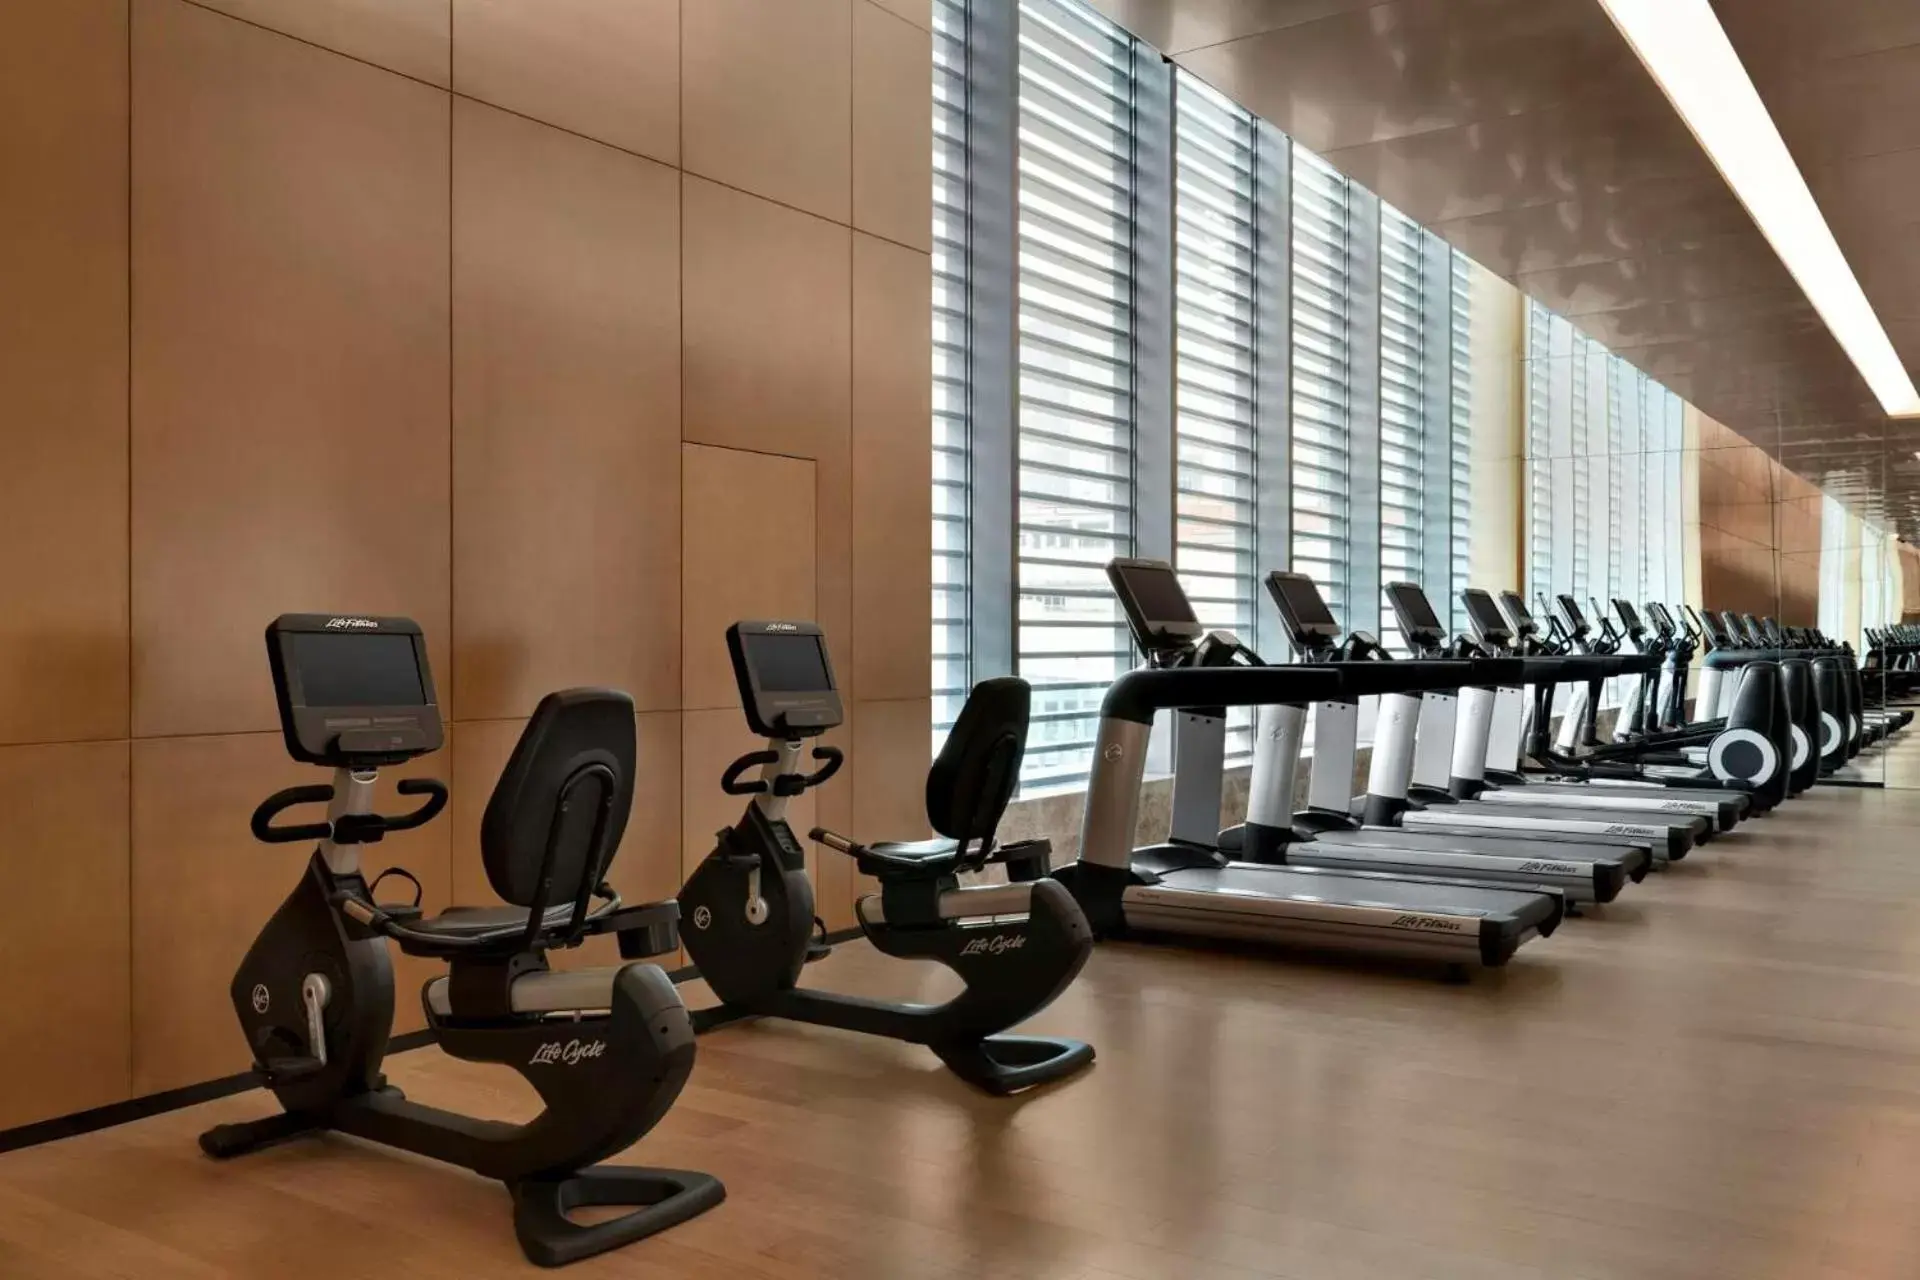 Fitness centre/facilities, Fitness Center/Facilities in Kempinski Hotel Hangzhou